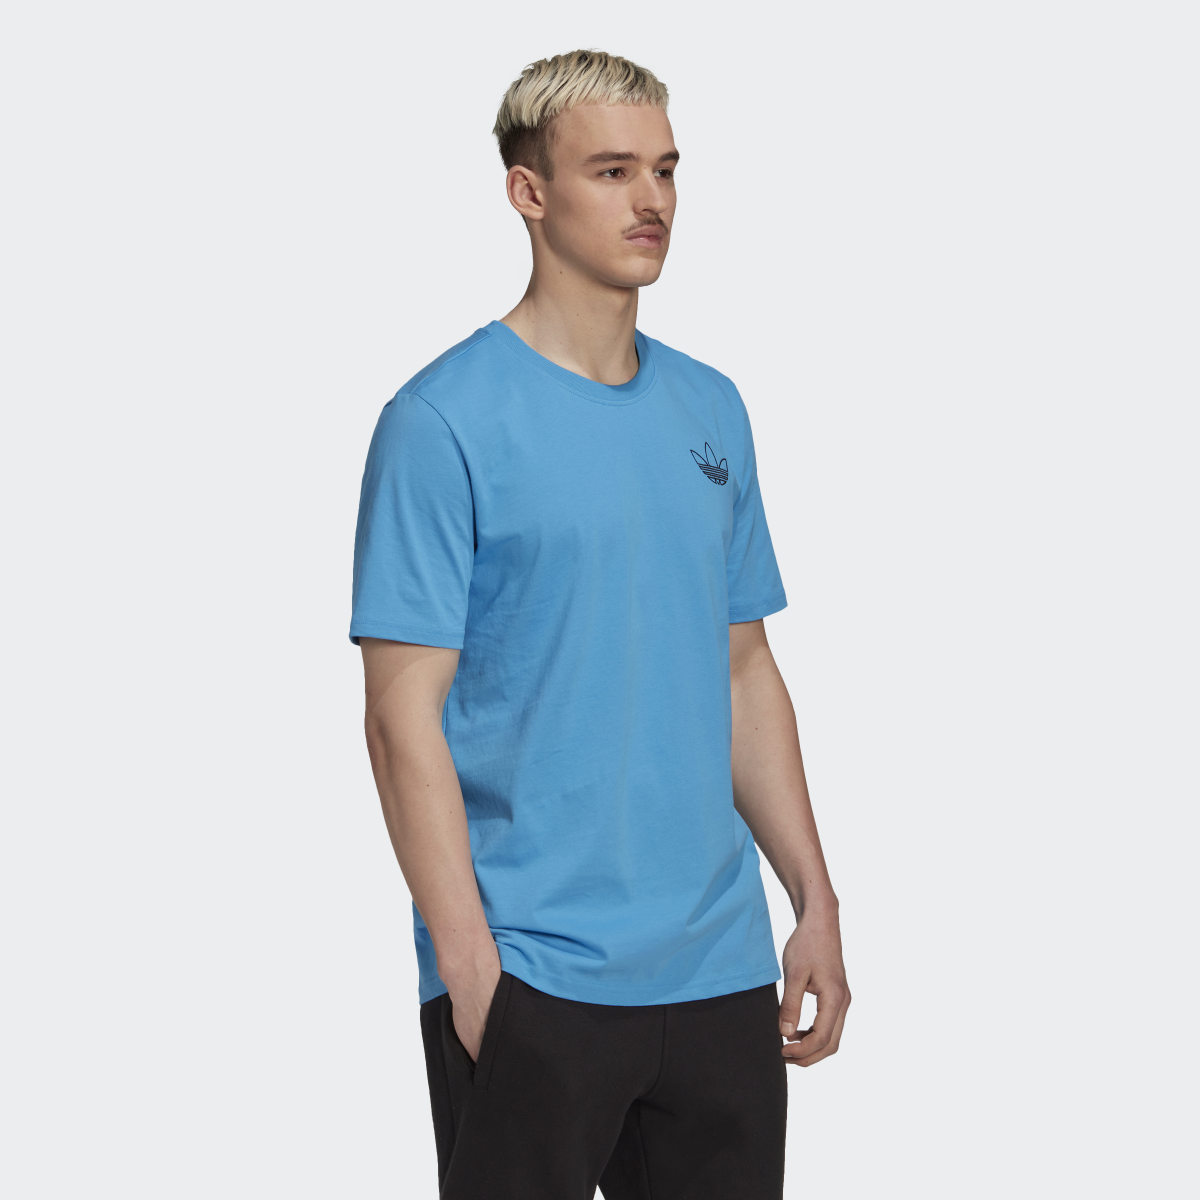 Adidas T-shirt Style Trefoil Series. 4